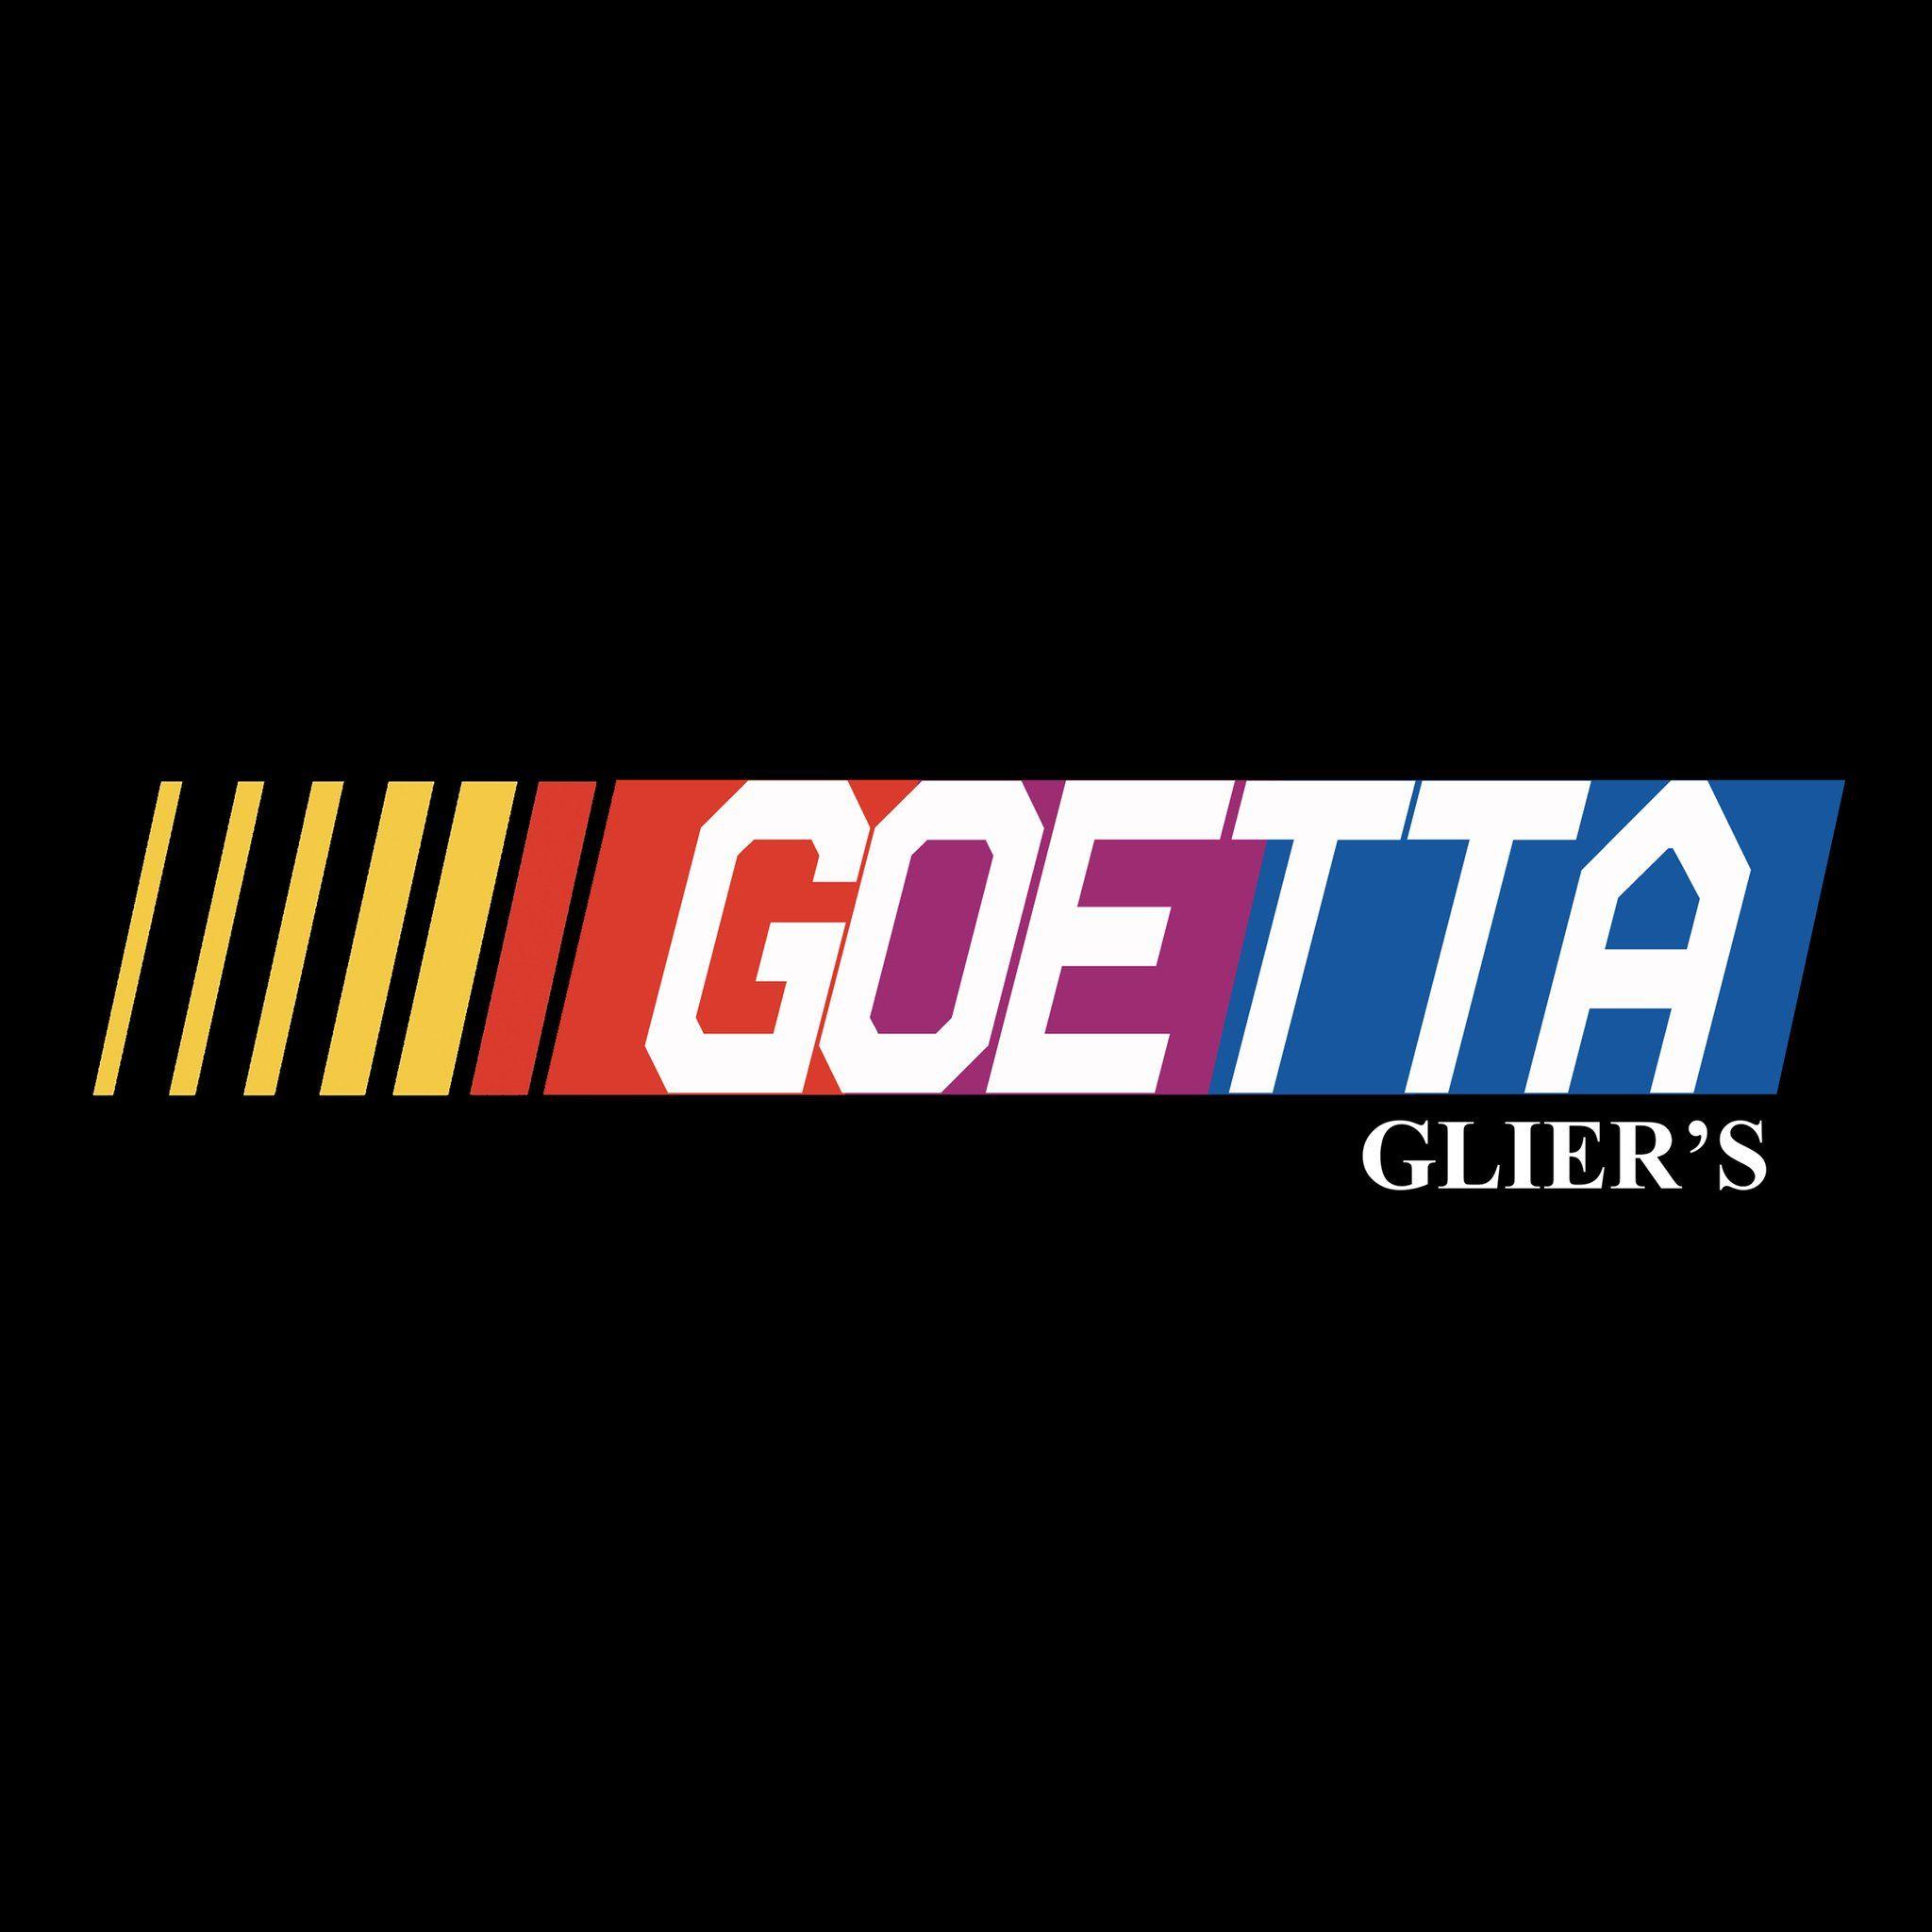 Race Car Logo - Glier's Goetta Race Car Logo | Cincinnati Food Apparel | Cincy Shirts